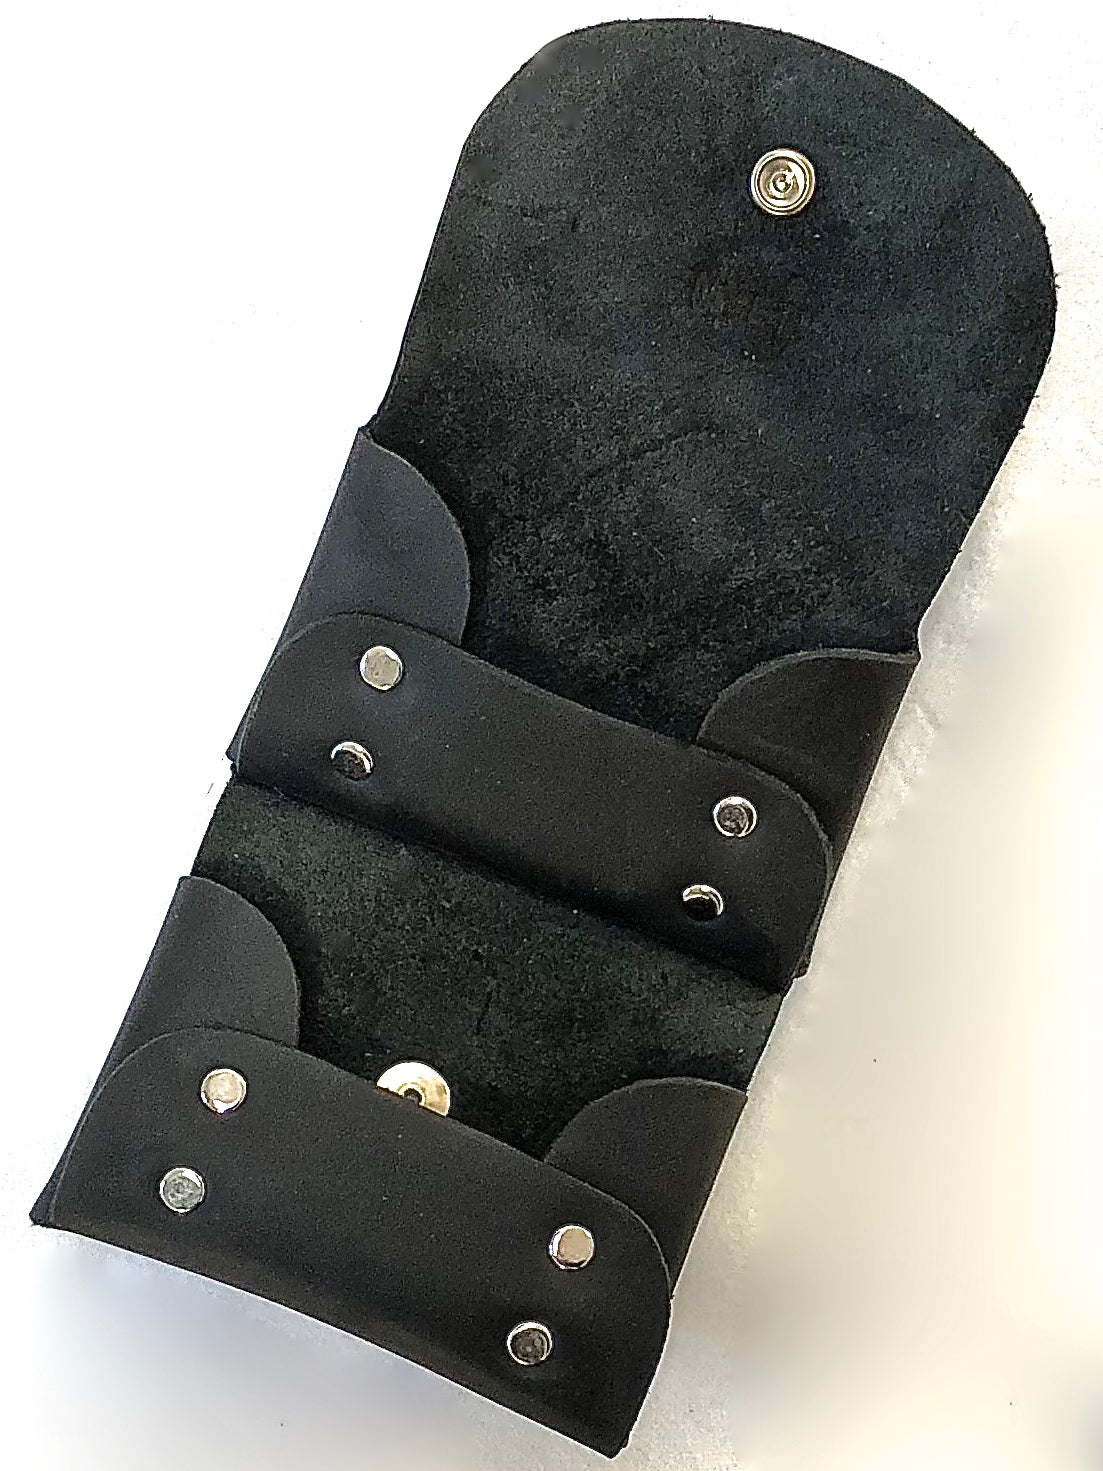 Nyet jewelry essentials wallet black latigo leather